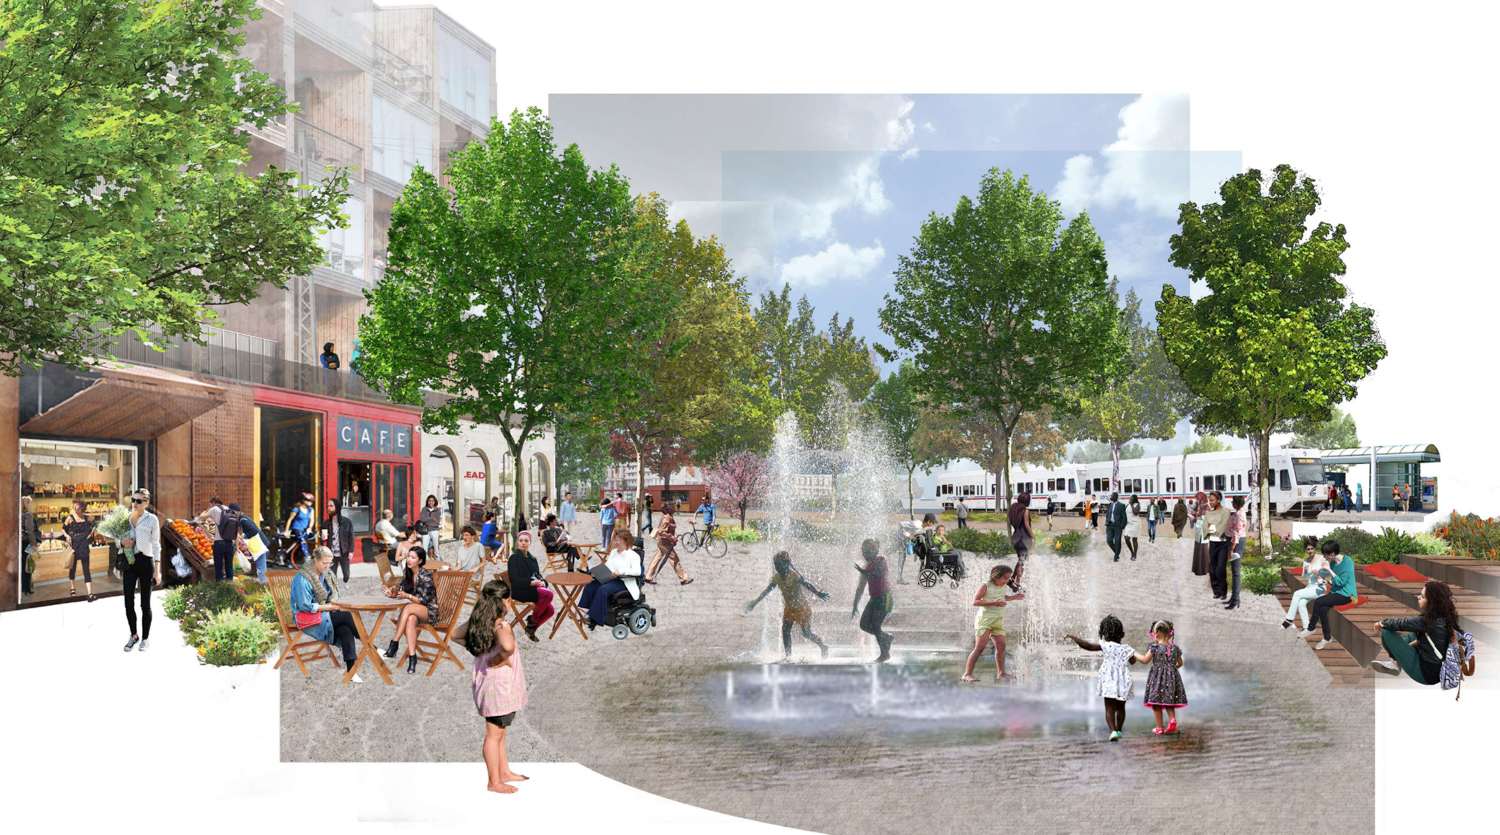 Google Middlefield Park Ellis Plaza, rendering courtesy Google